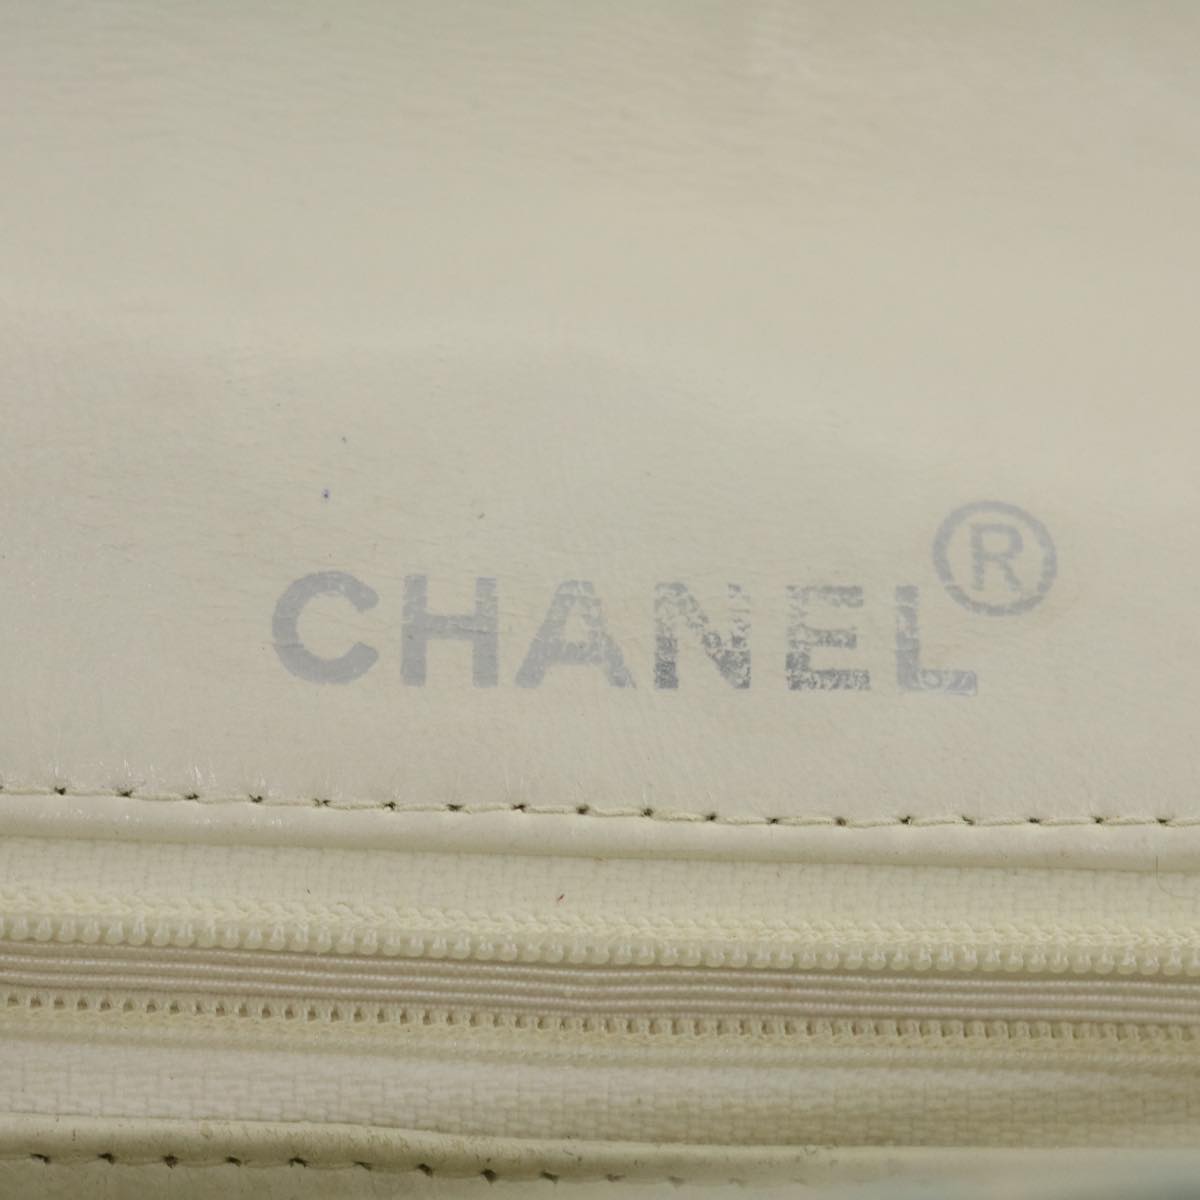 CHANEL Matelasse Tweed Turn Lock Chain Shoulder Bag White Light Blue Auth 29960A